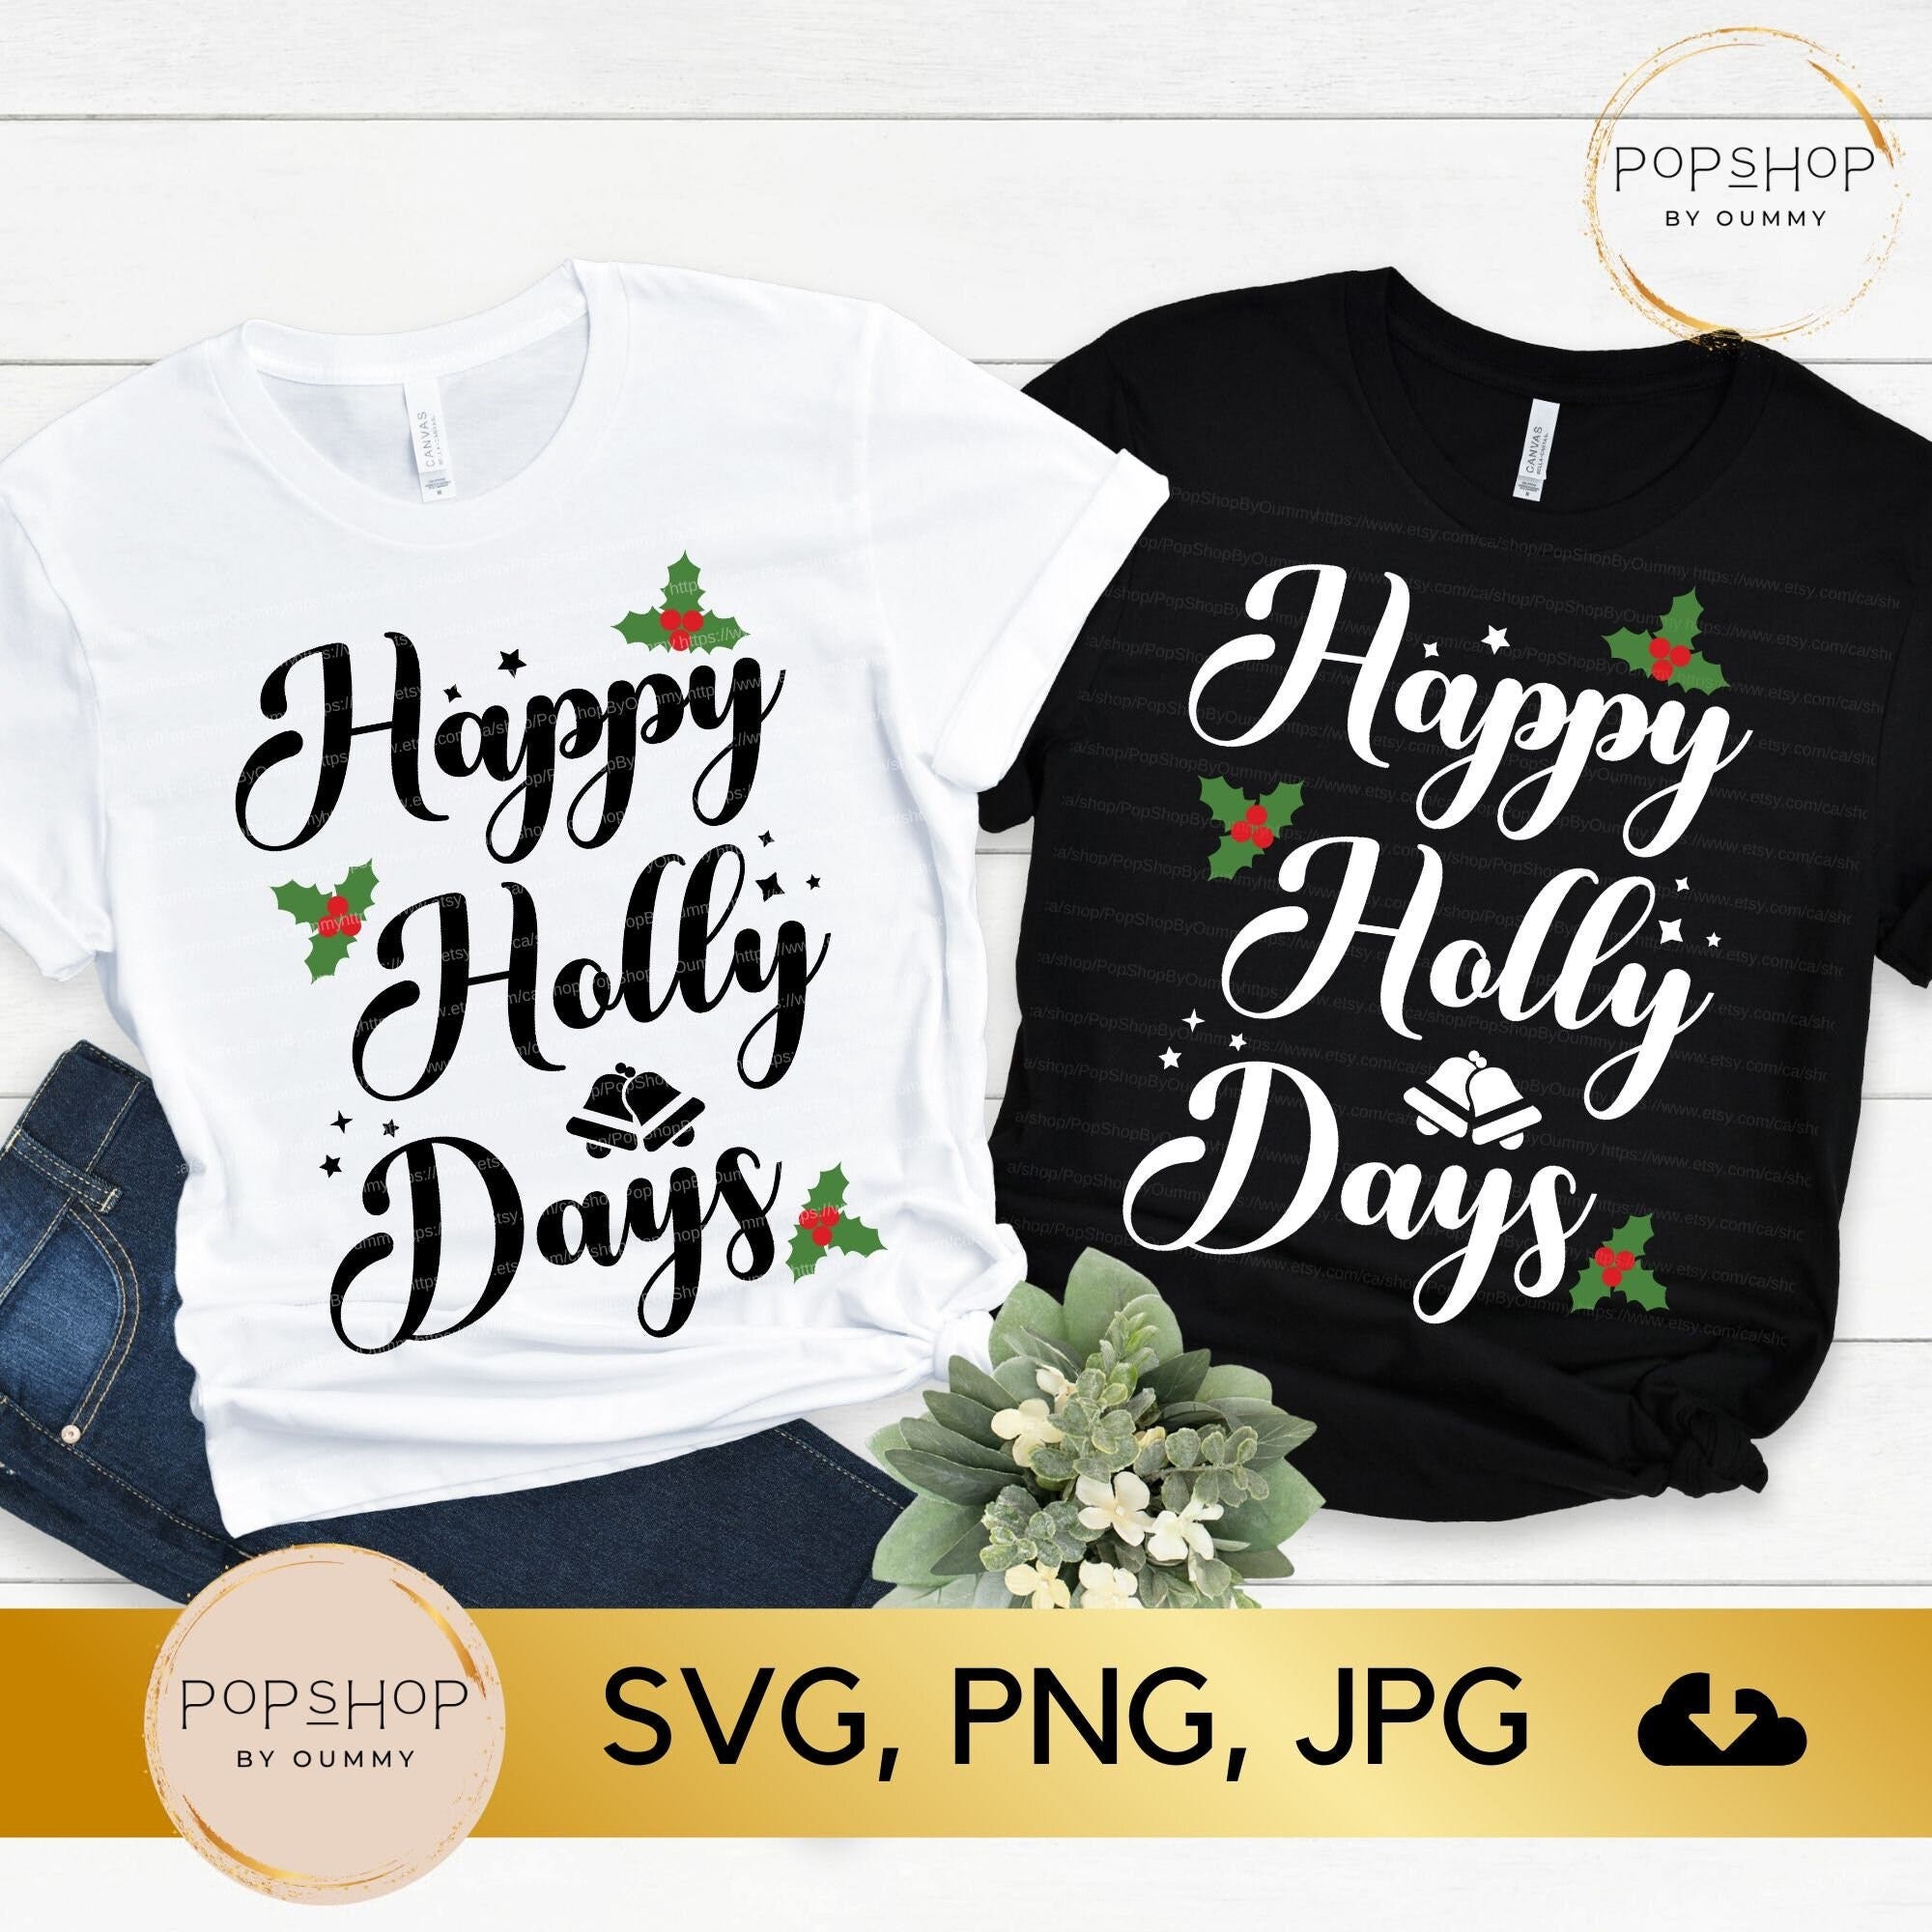 Happy Holly Days SVG, Festive Xmas Svg, Christmas Svg, Matching Family Shirt Svg, Elf Life Svg, Festive Holly Svg, Png, Jpg